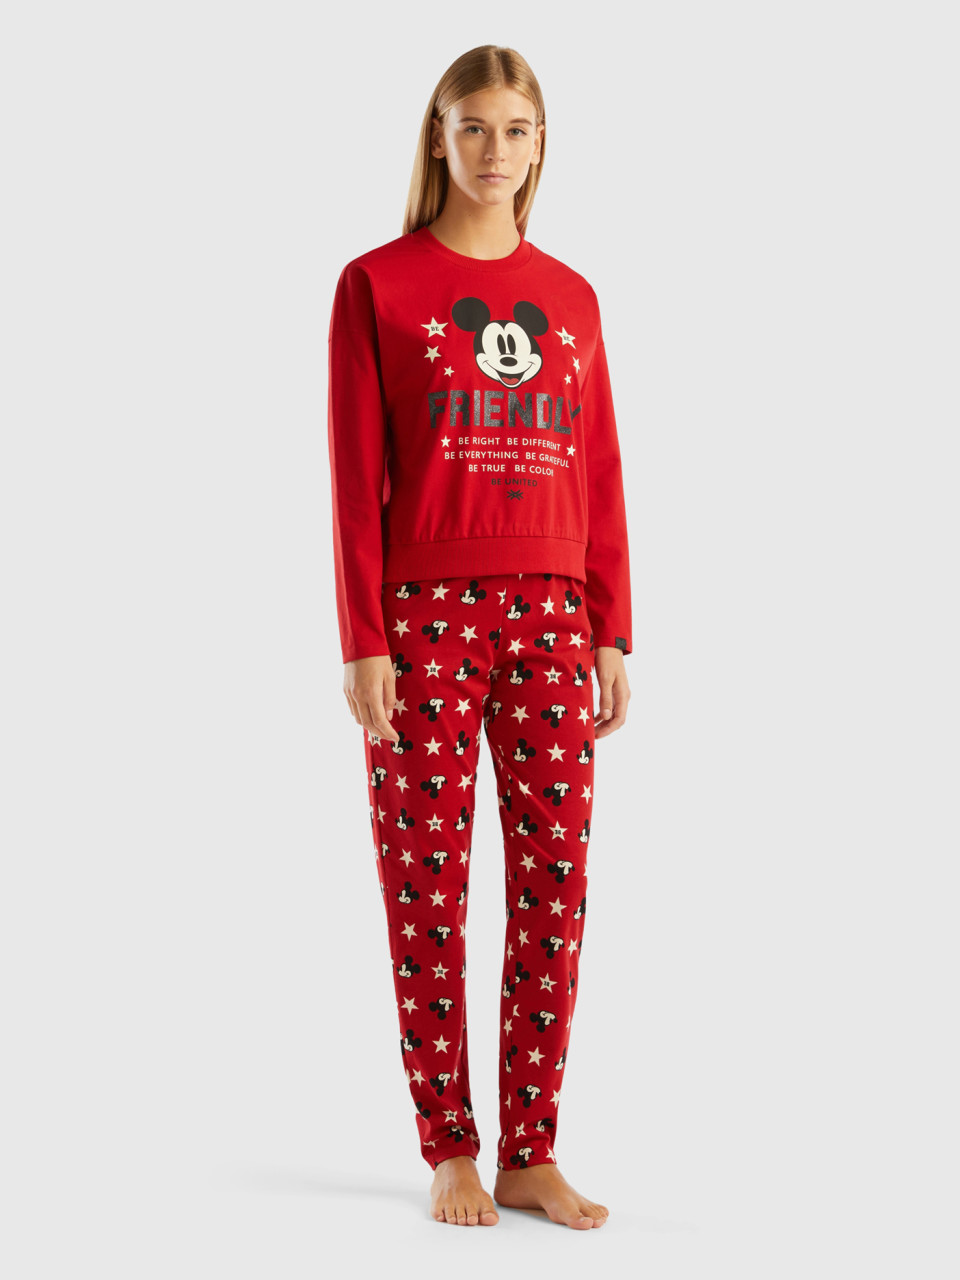 Benetton, Pyjamas With Neon Mickey Mouse Print, Red, Women